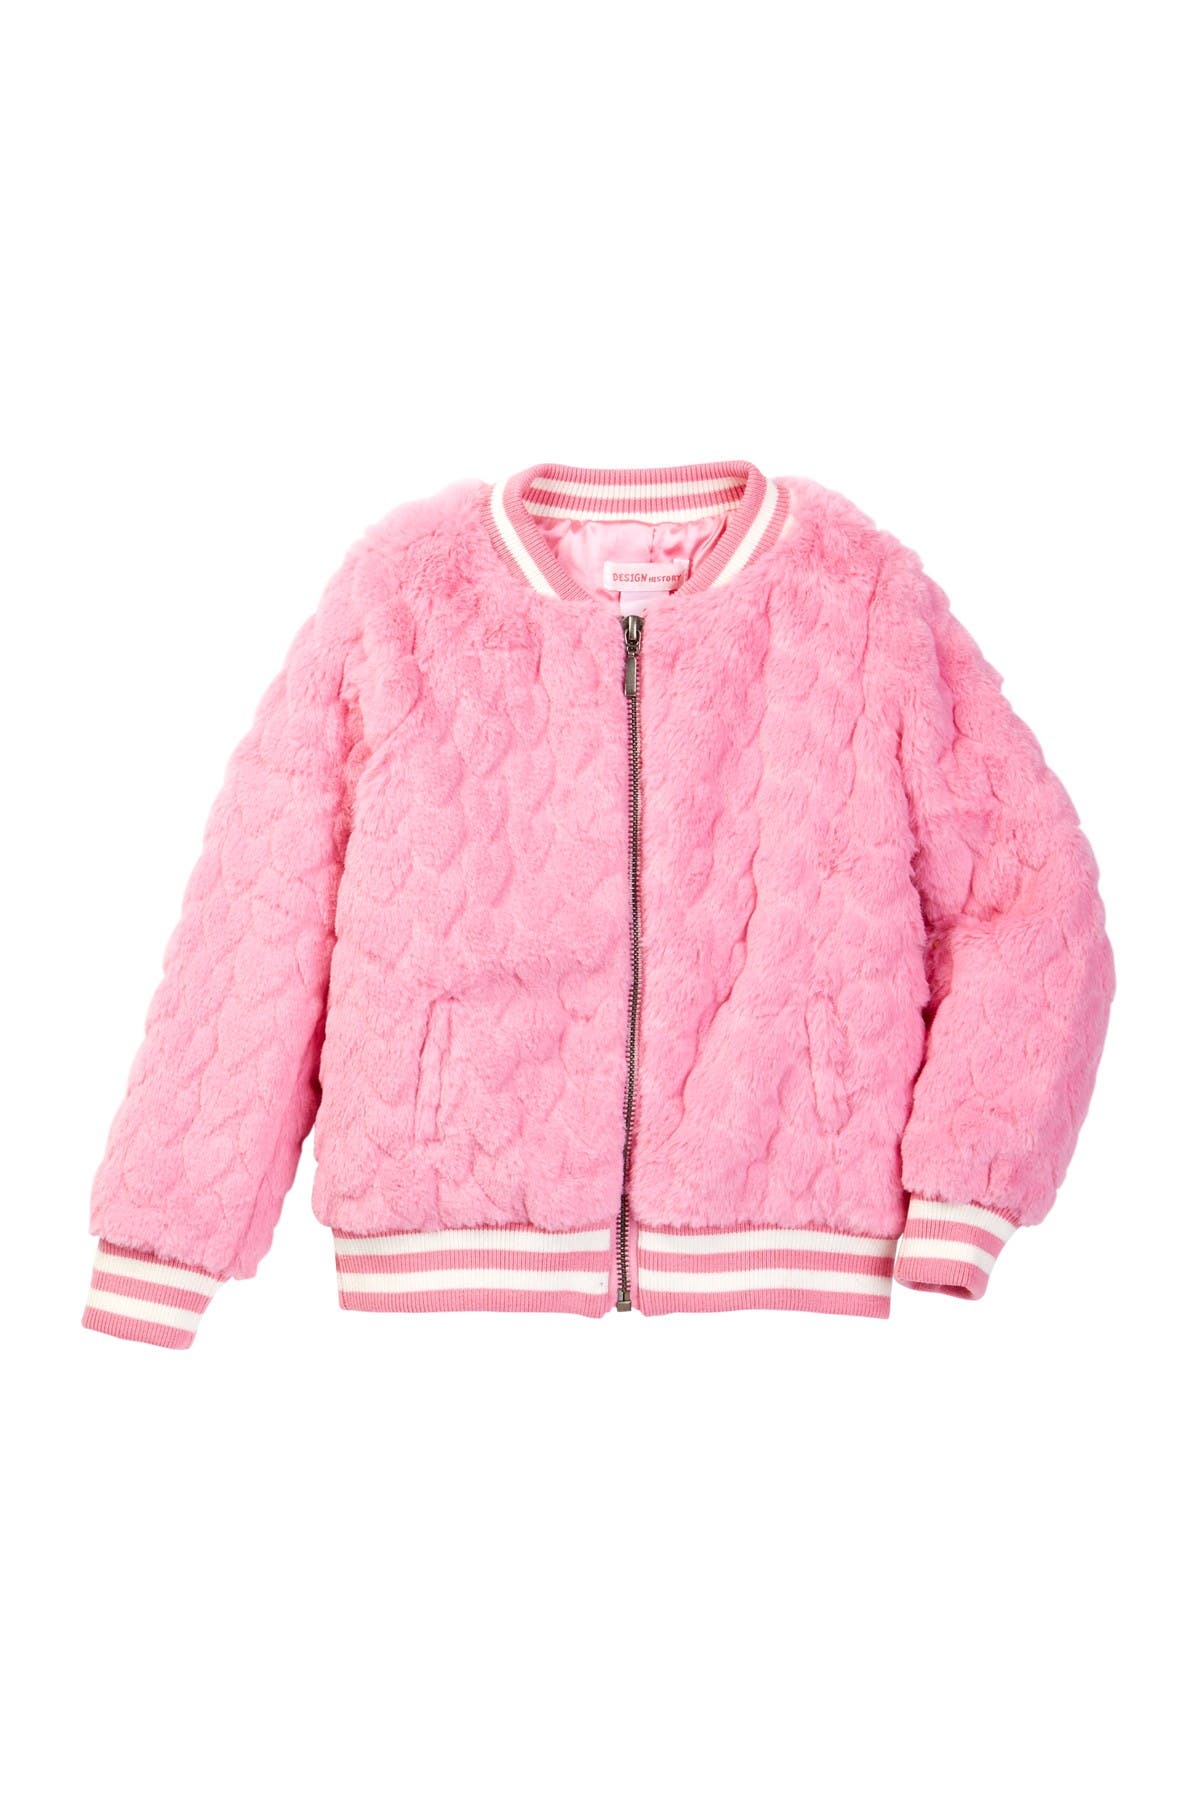 pink heart nike jacket